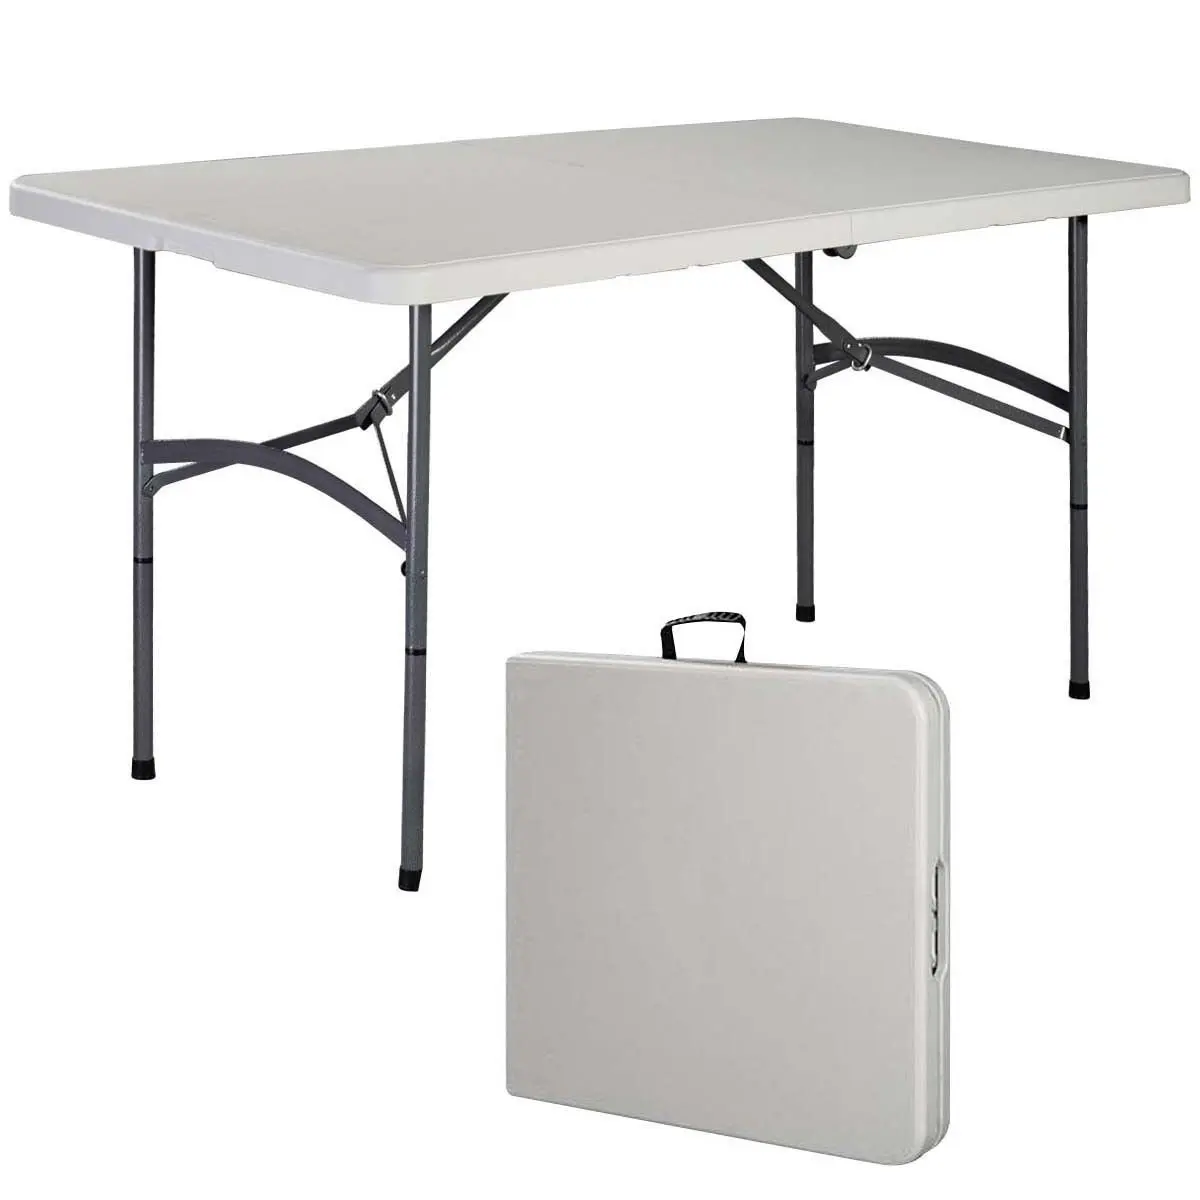 GS-1004forester стол со стальным каркасом 1,5м (1)